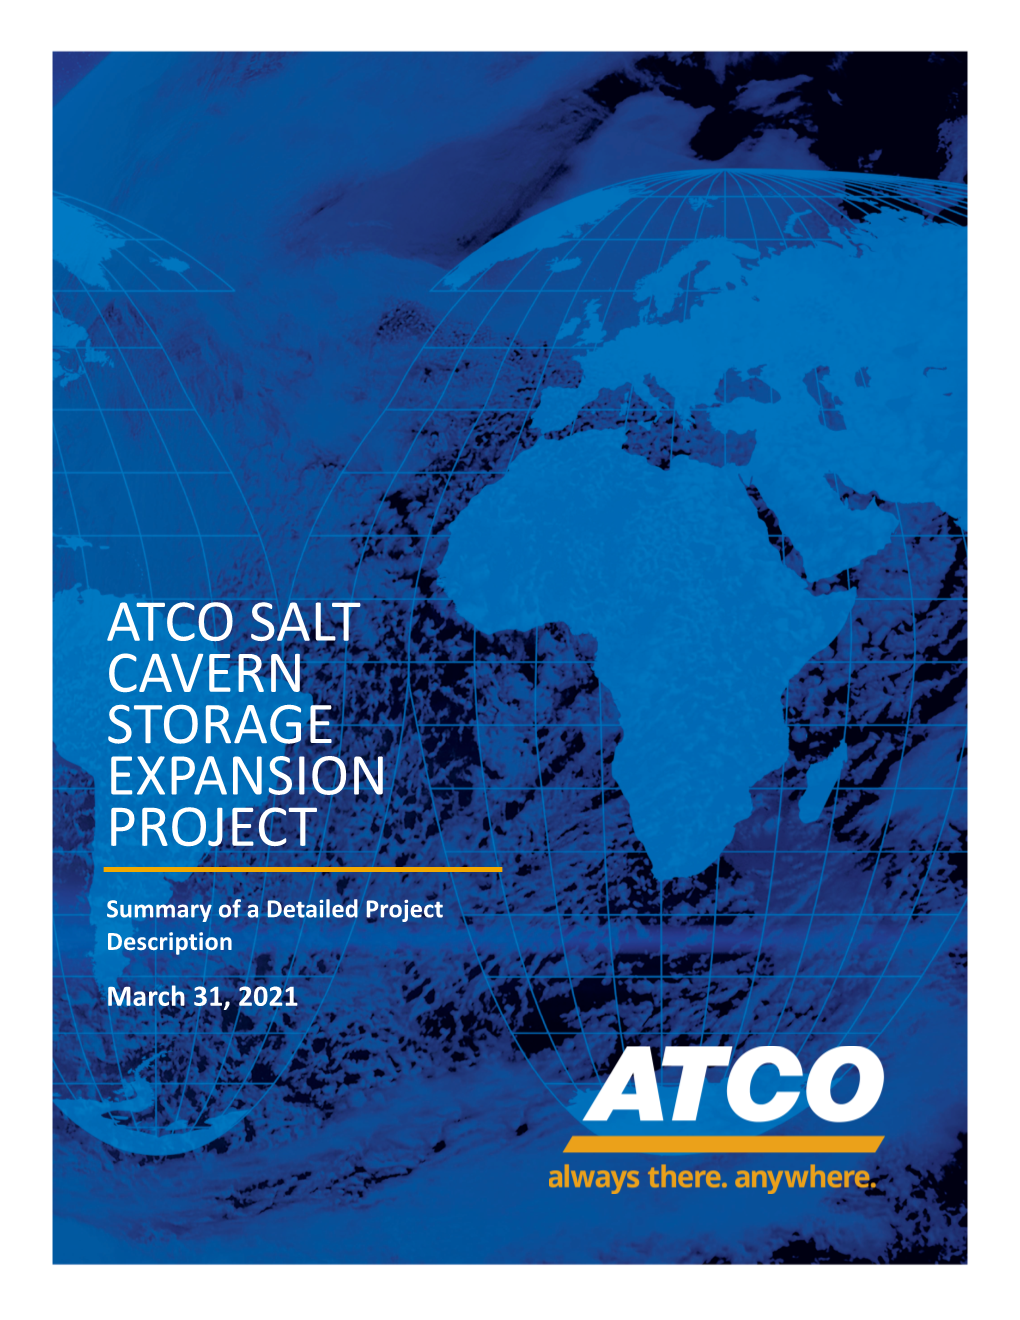 Atco Salt Cavern Storage Expansion Project